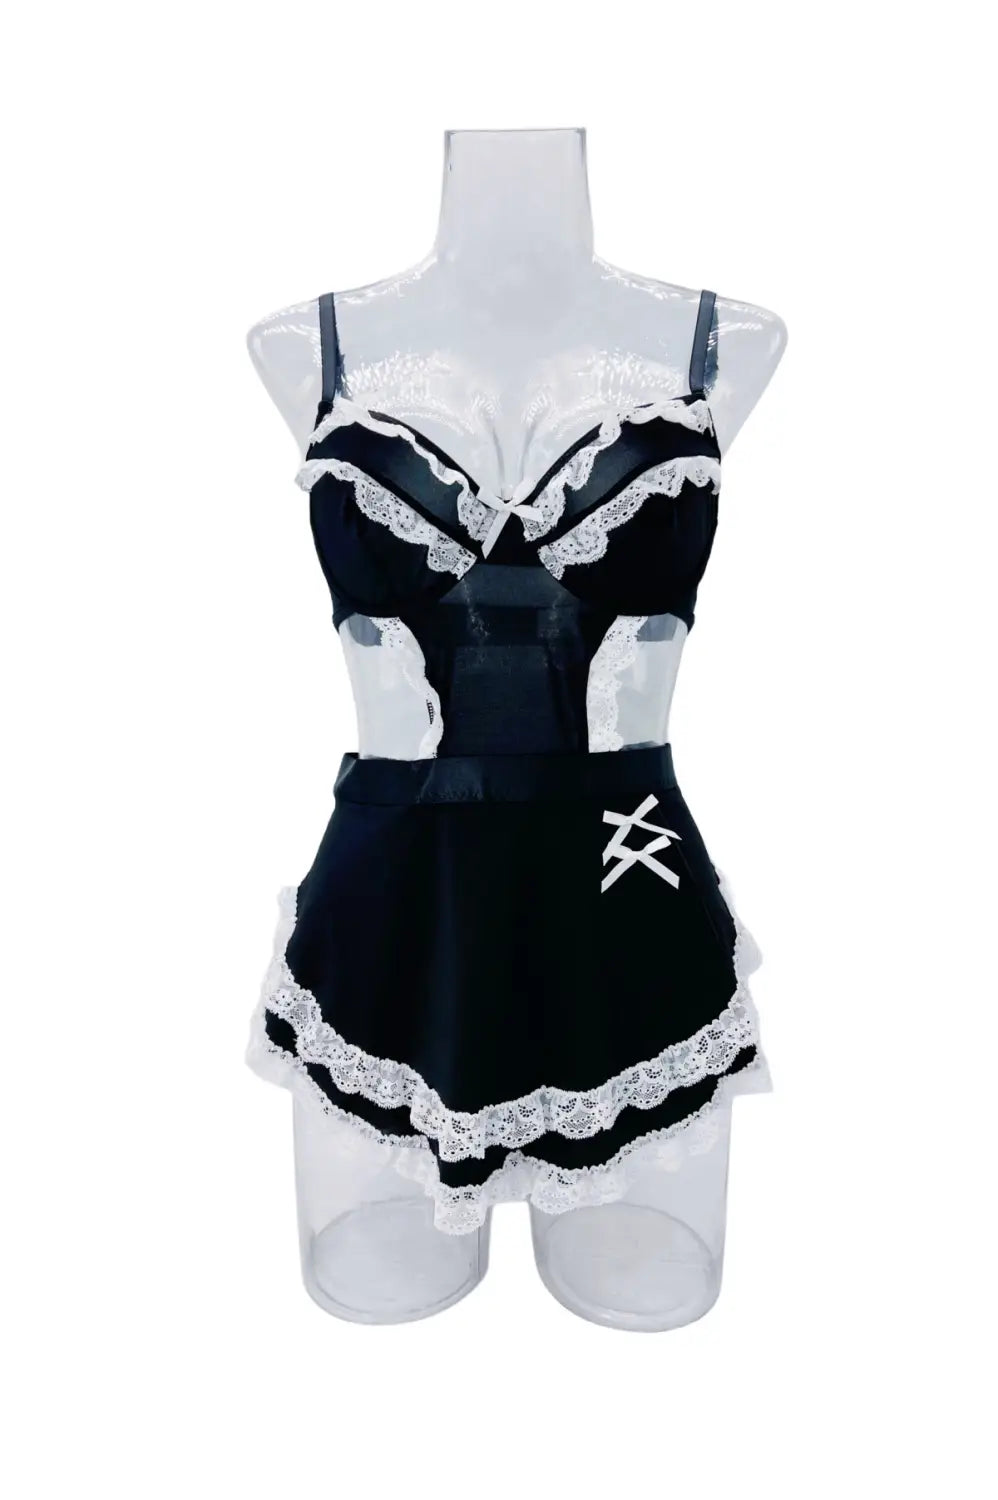 Flirty Maid Uniform - Playfully Provocative